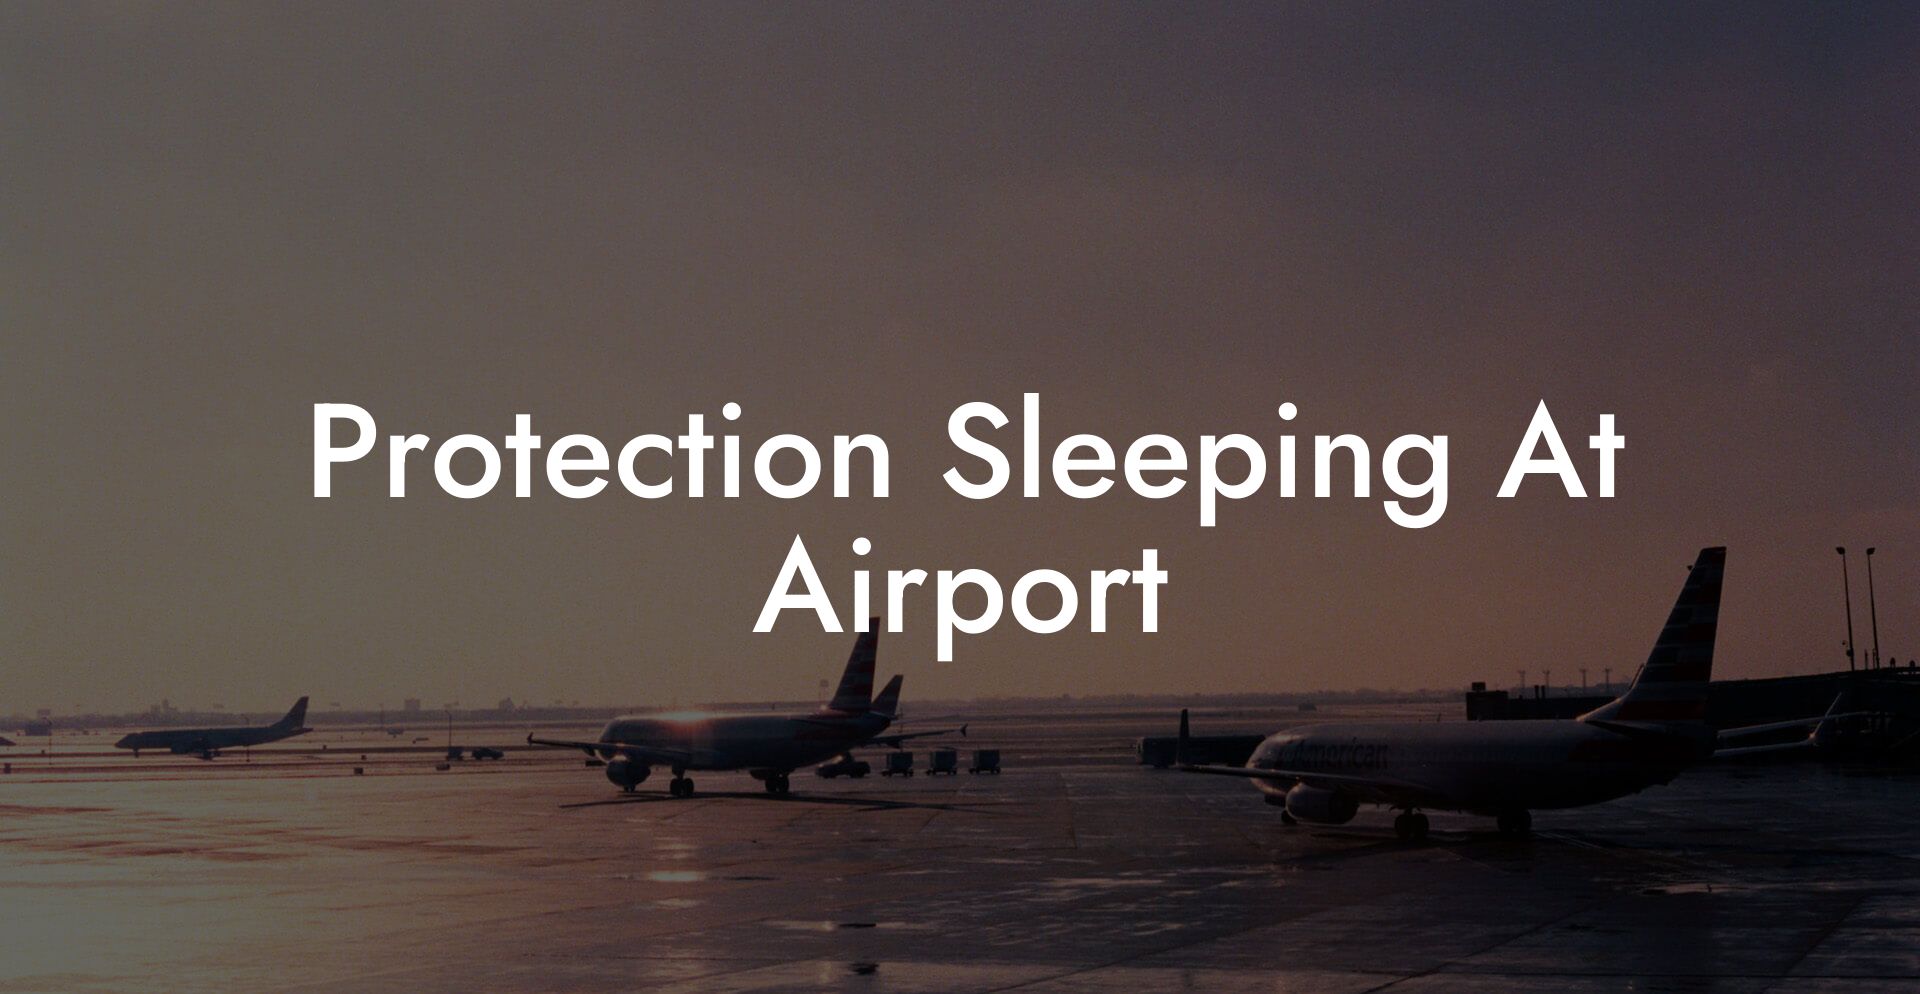 Protection Sleeping At Airport